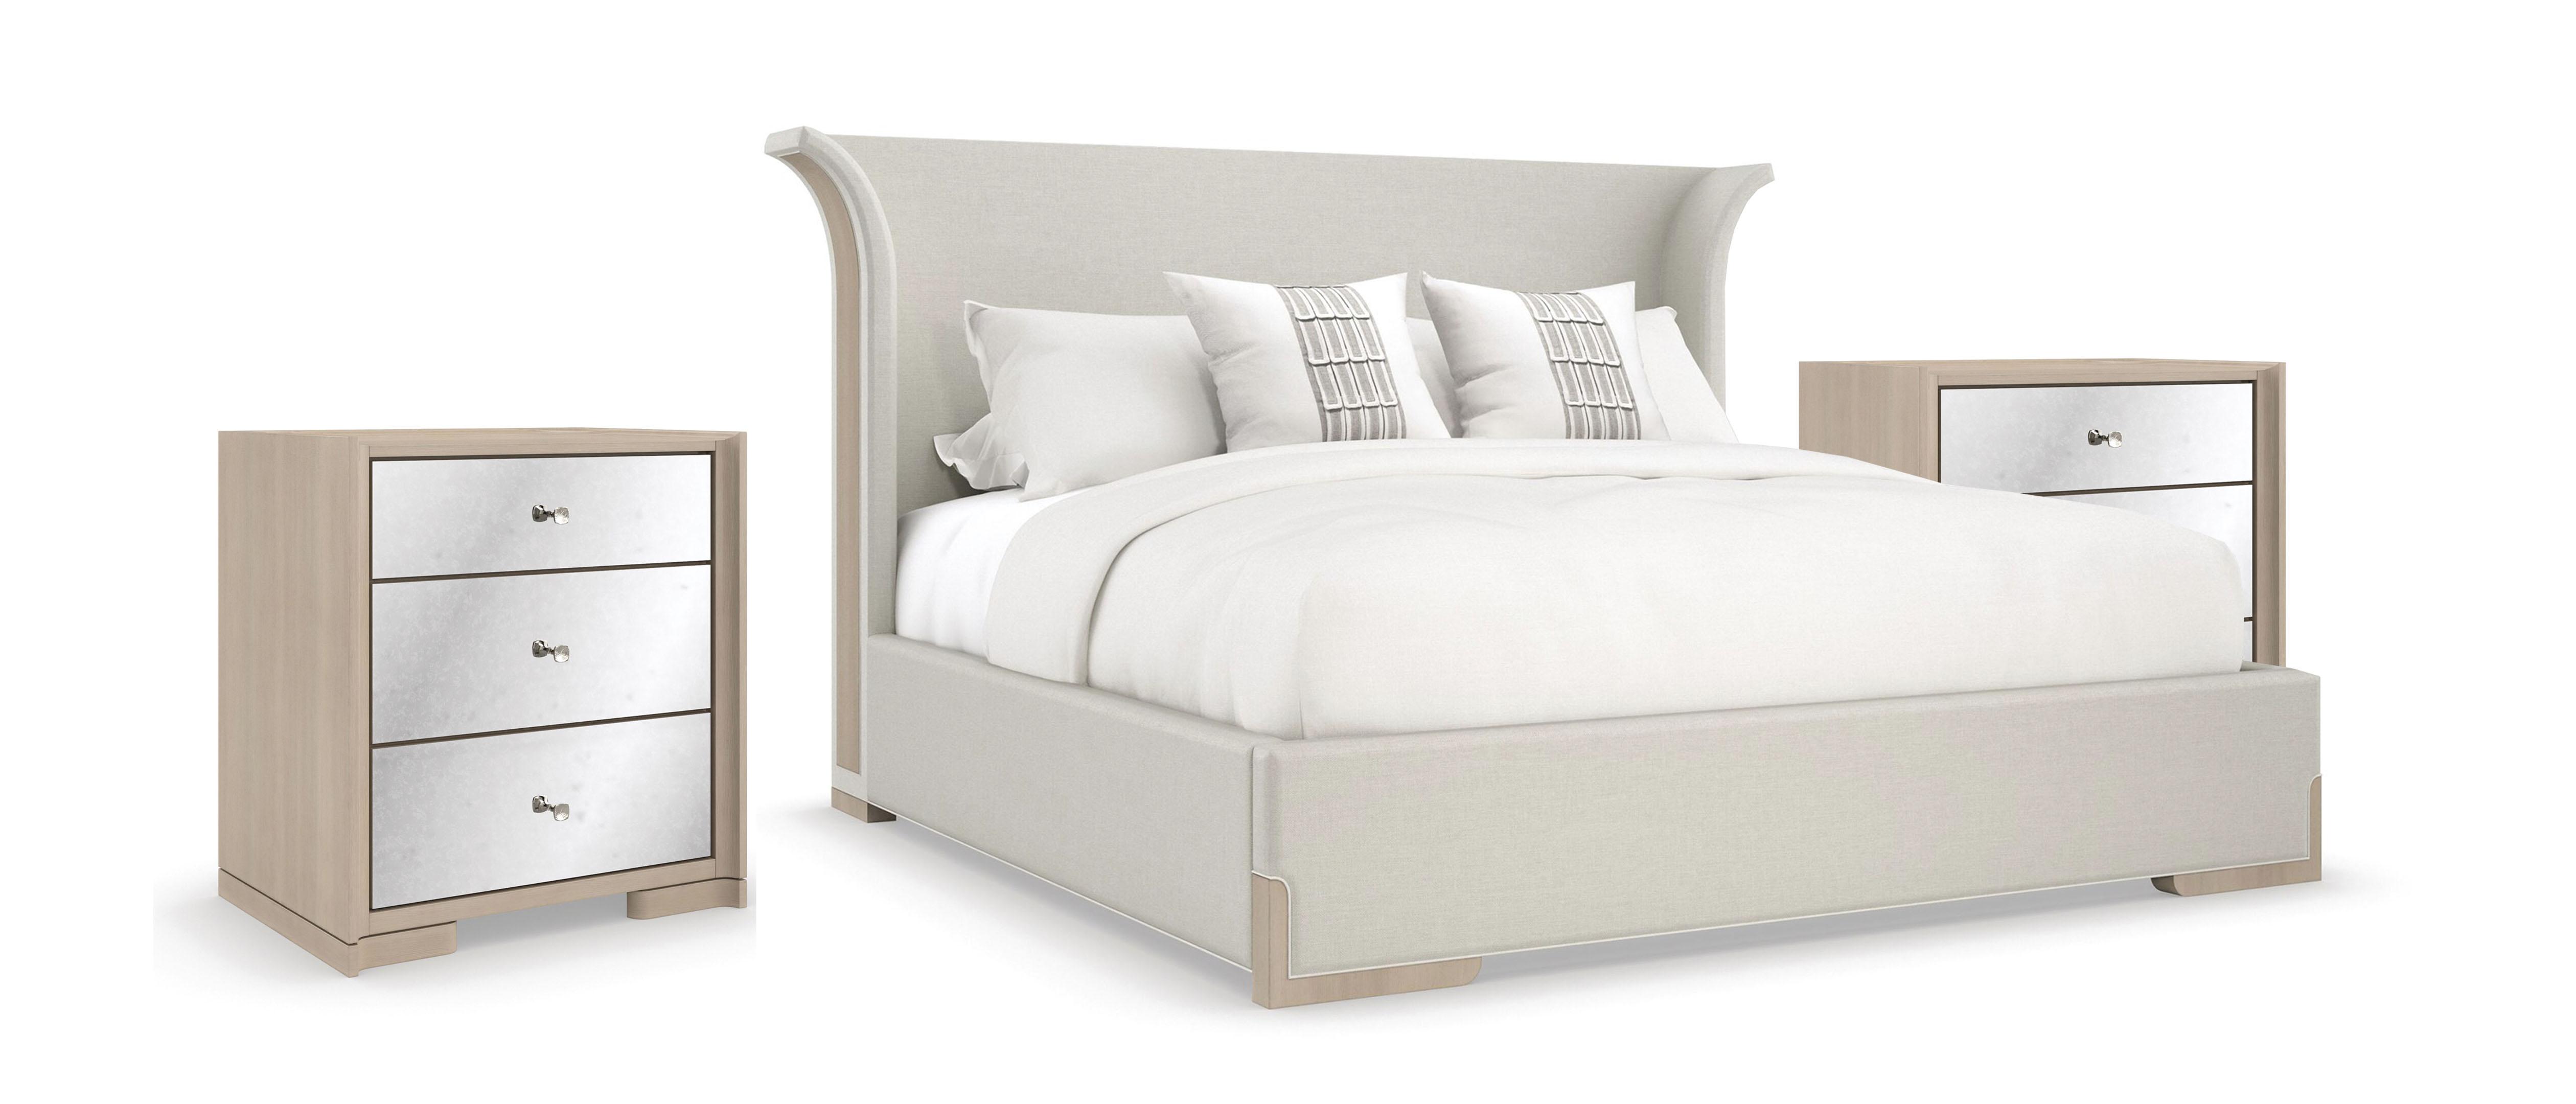 Contemporary Platform Bedroom Set BEAUTY SLEEP-KING / IN YOUR DREAMS CLA-021-102-Set-3 in Light Gray 